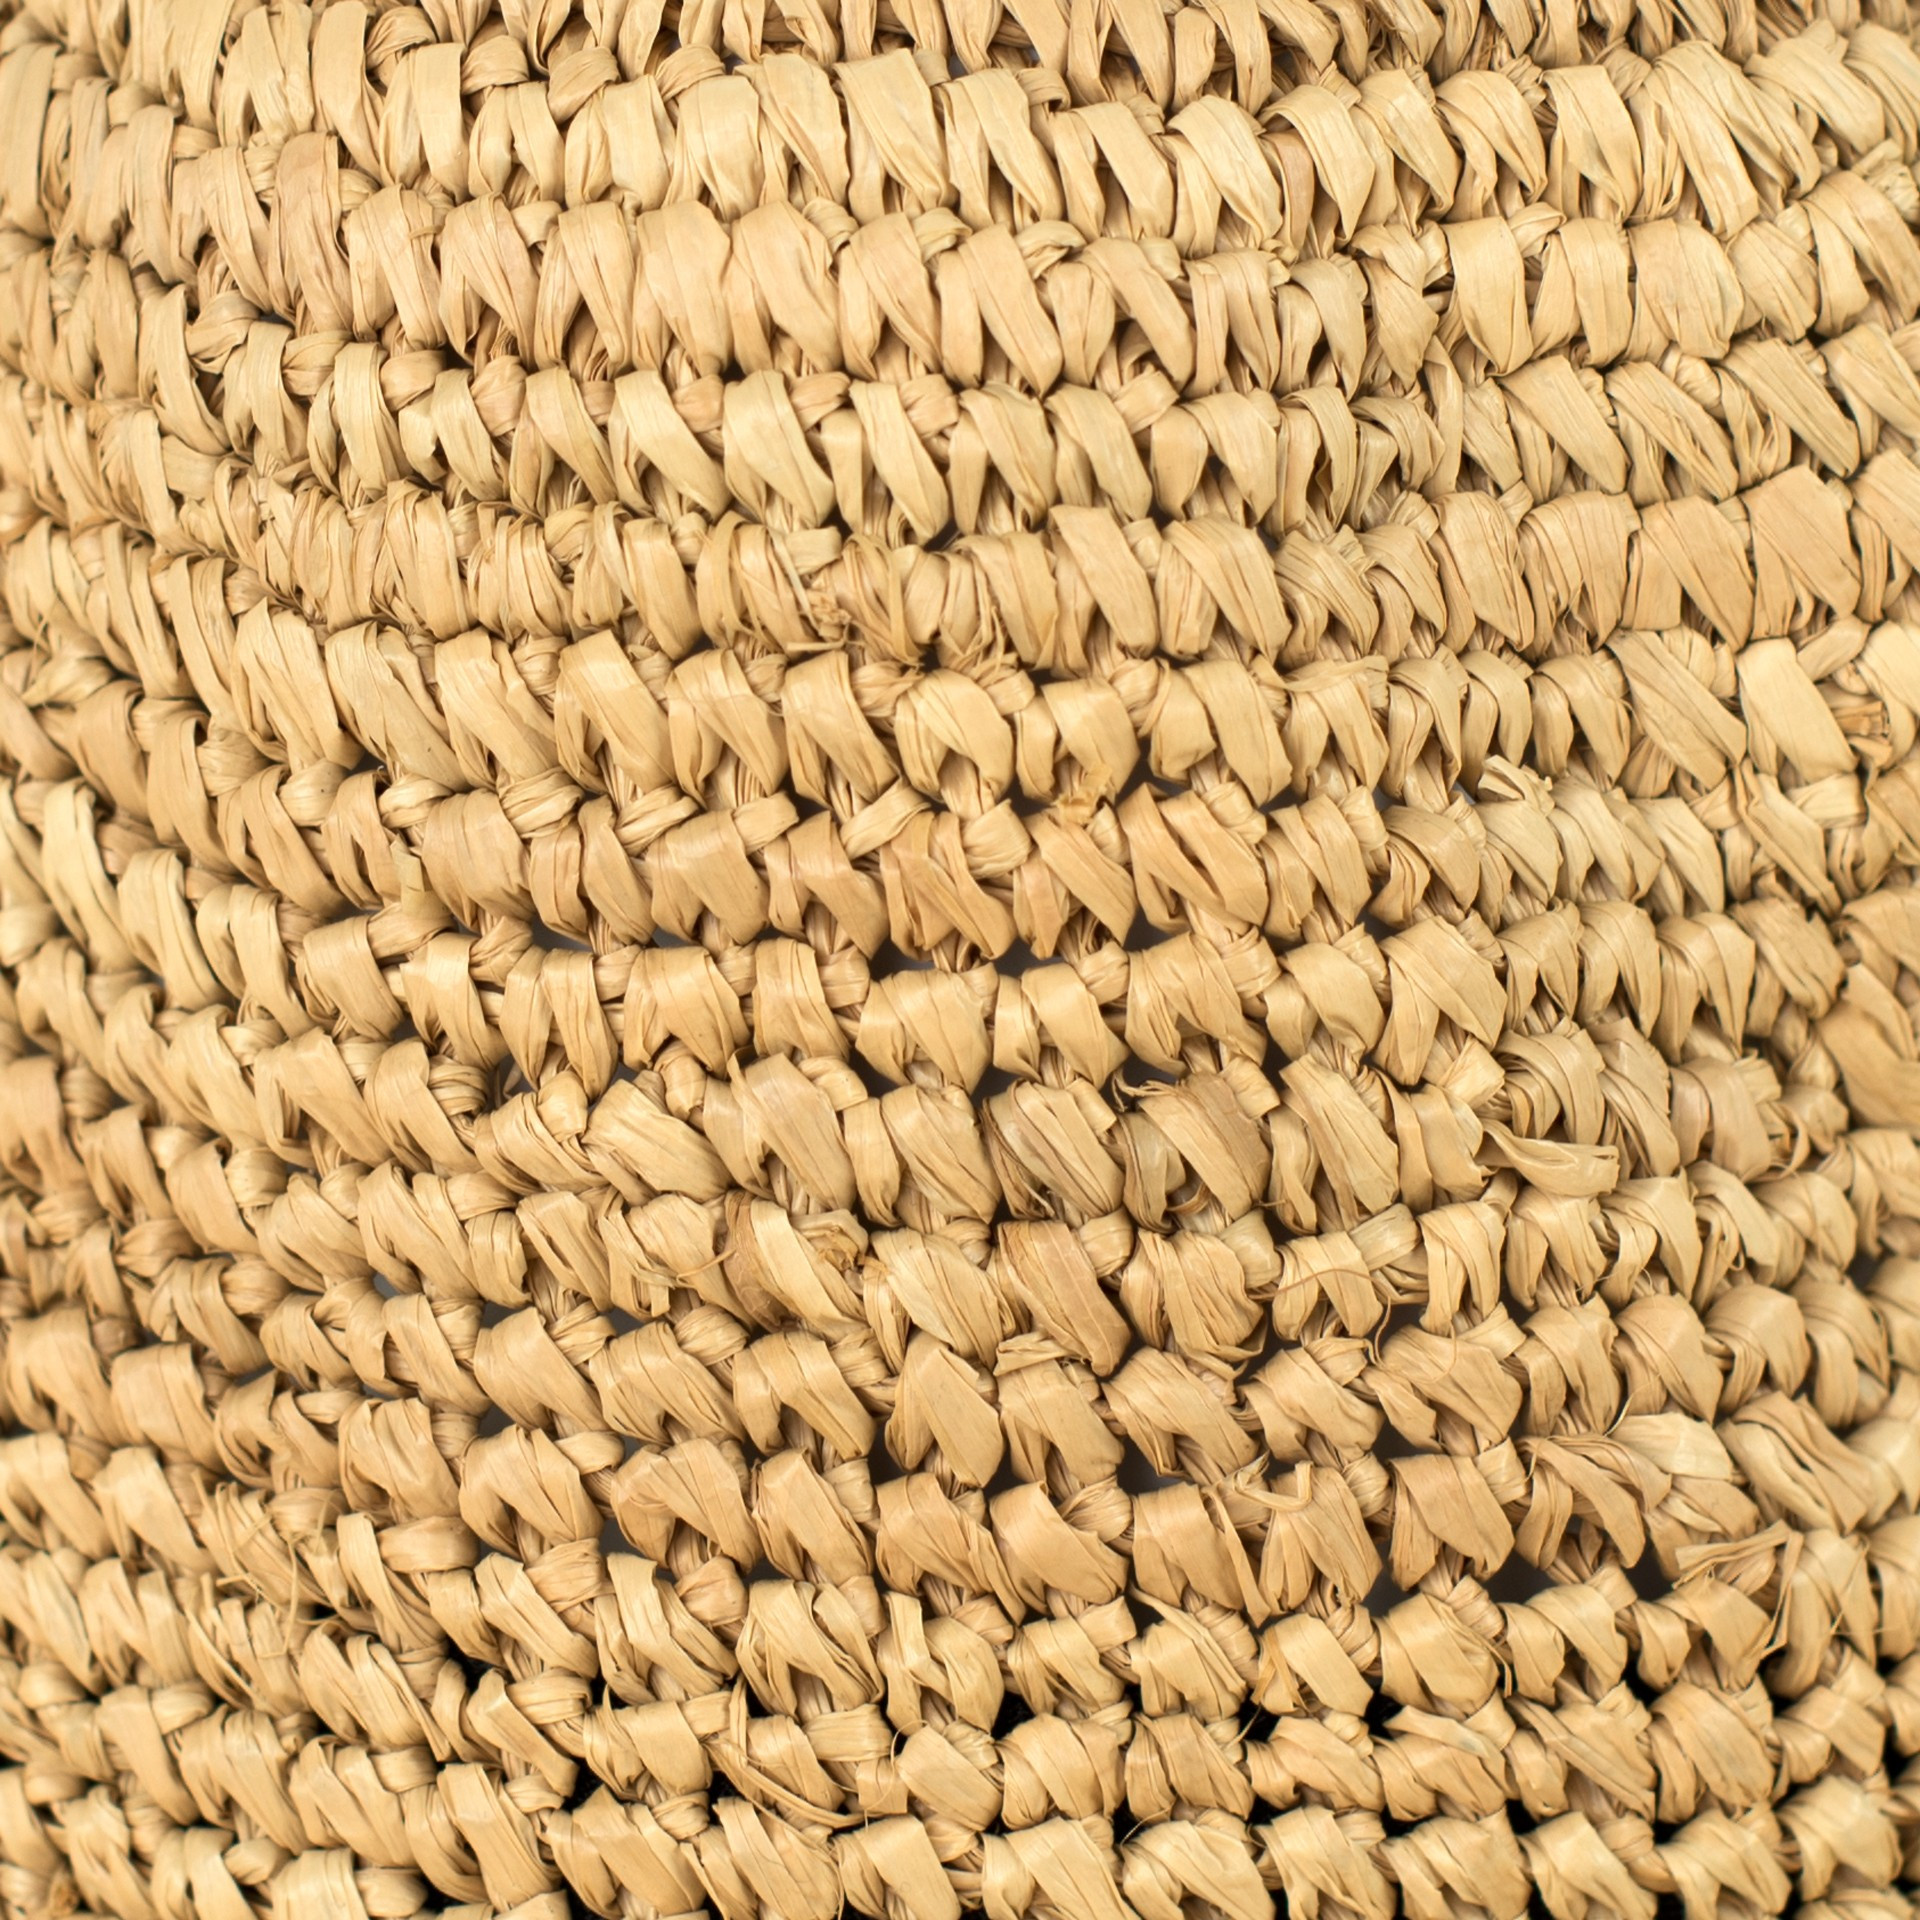 Dámský klobouk Art Of Polo Hat cz21156-2 Beige UNI